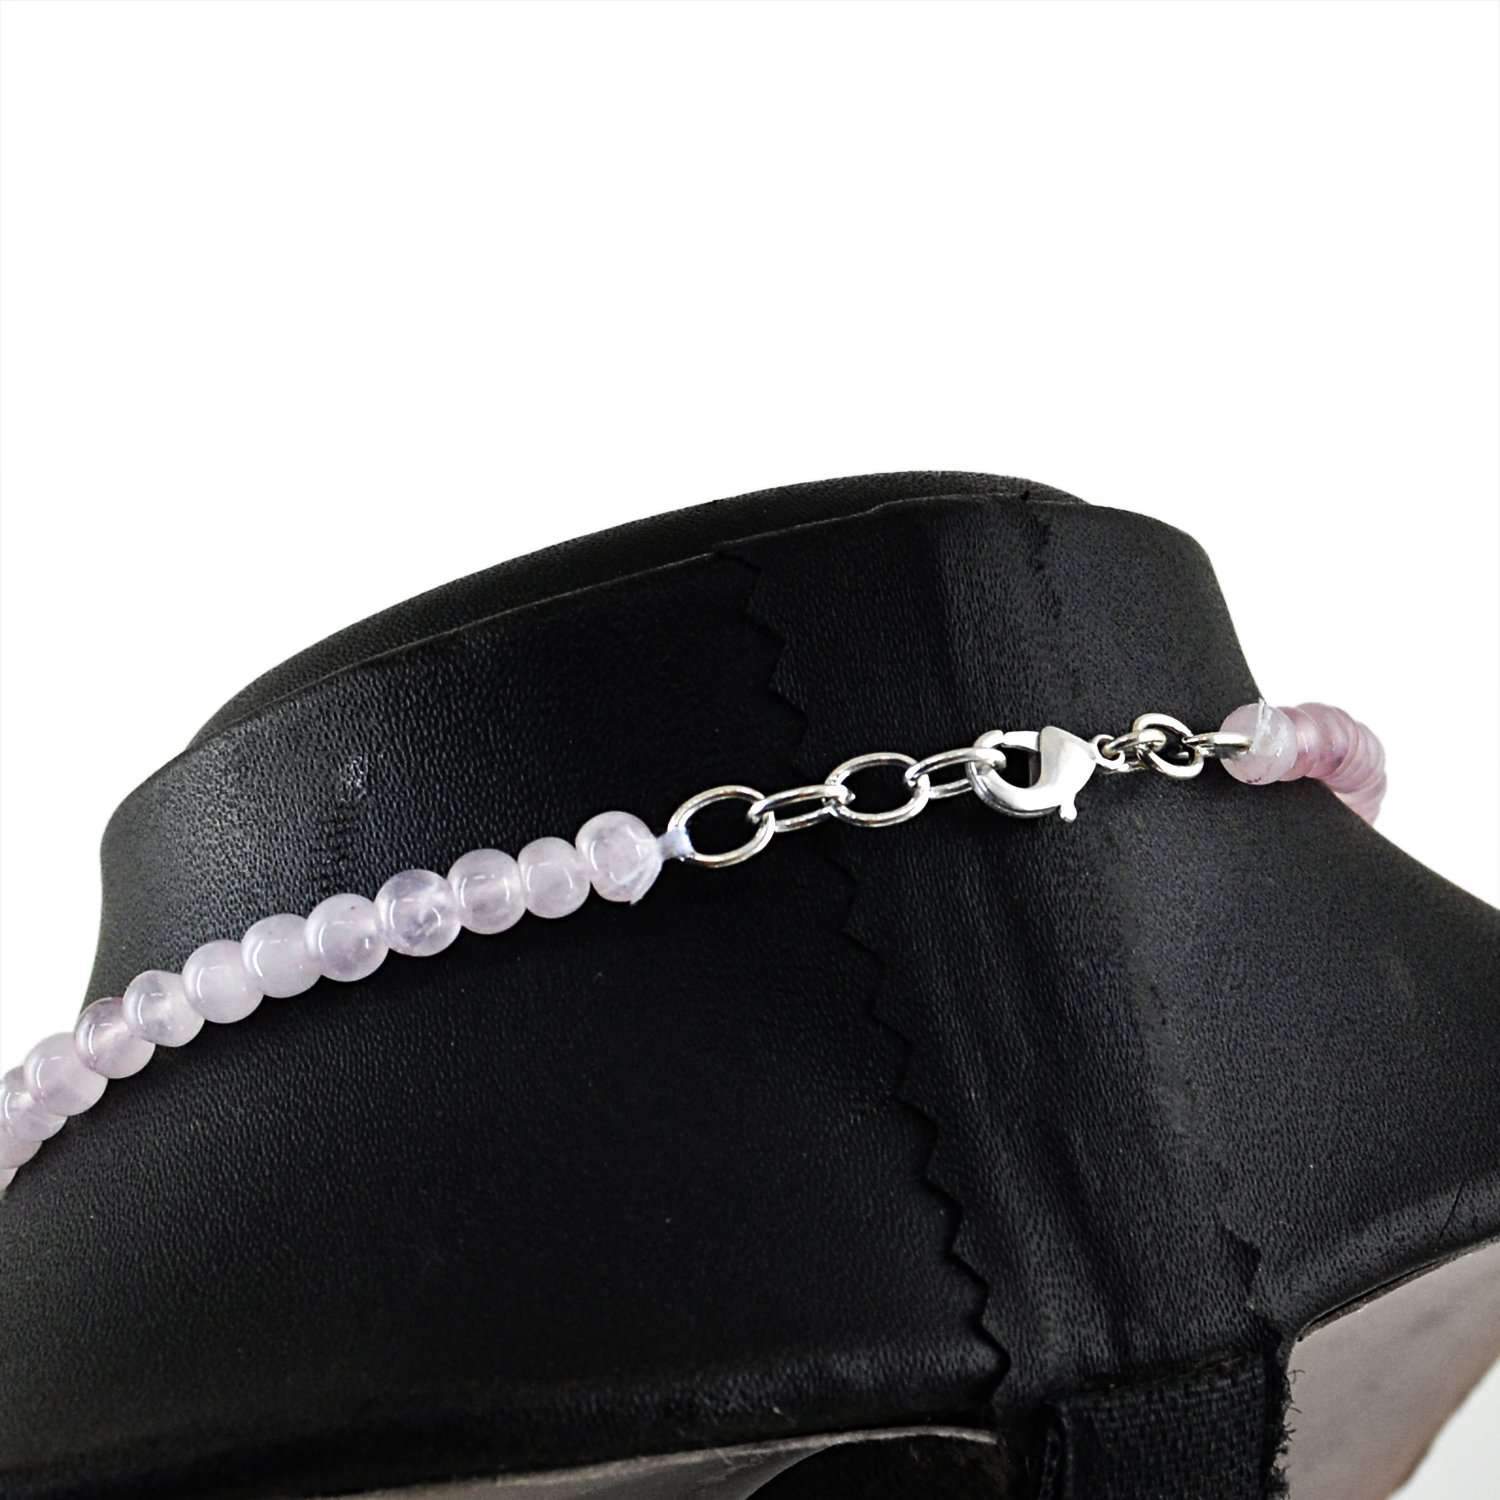 gemsmore:Round Shape Pink Rose Quartz & Blue Lapis Lazuli Necklace Natural Untreated Beads